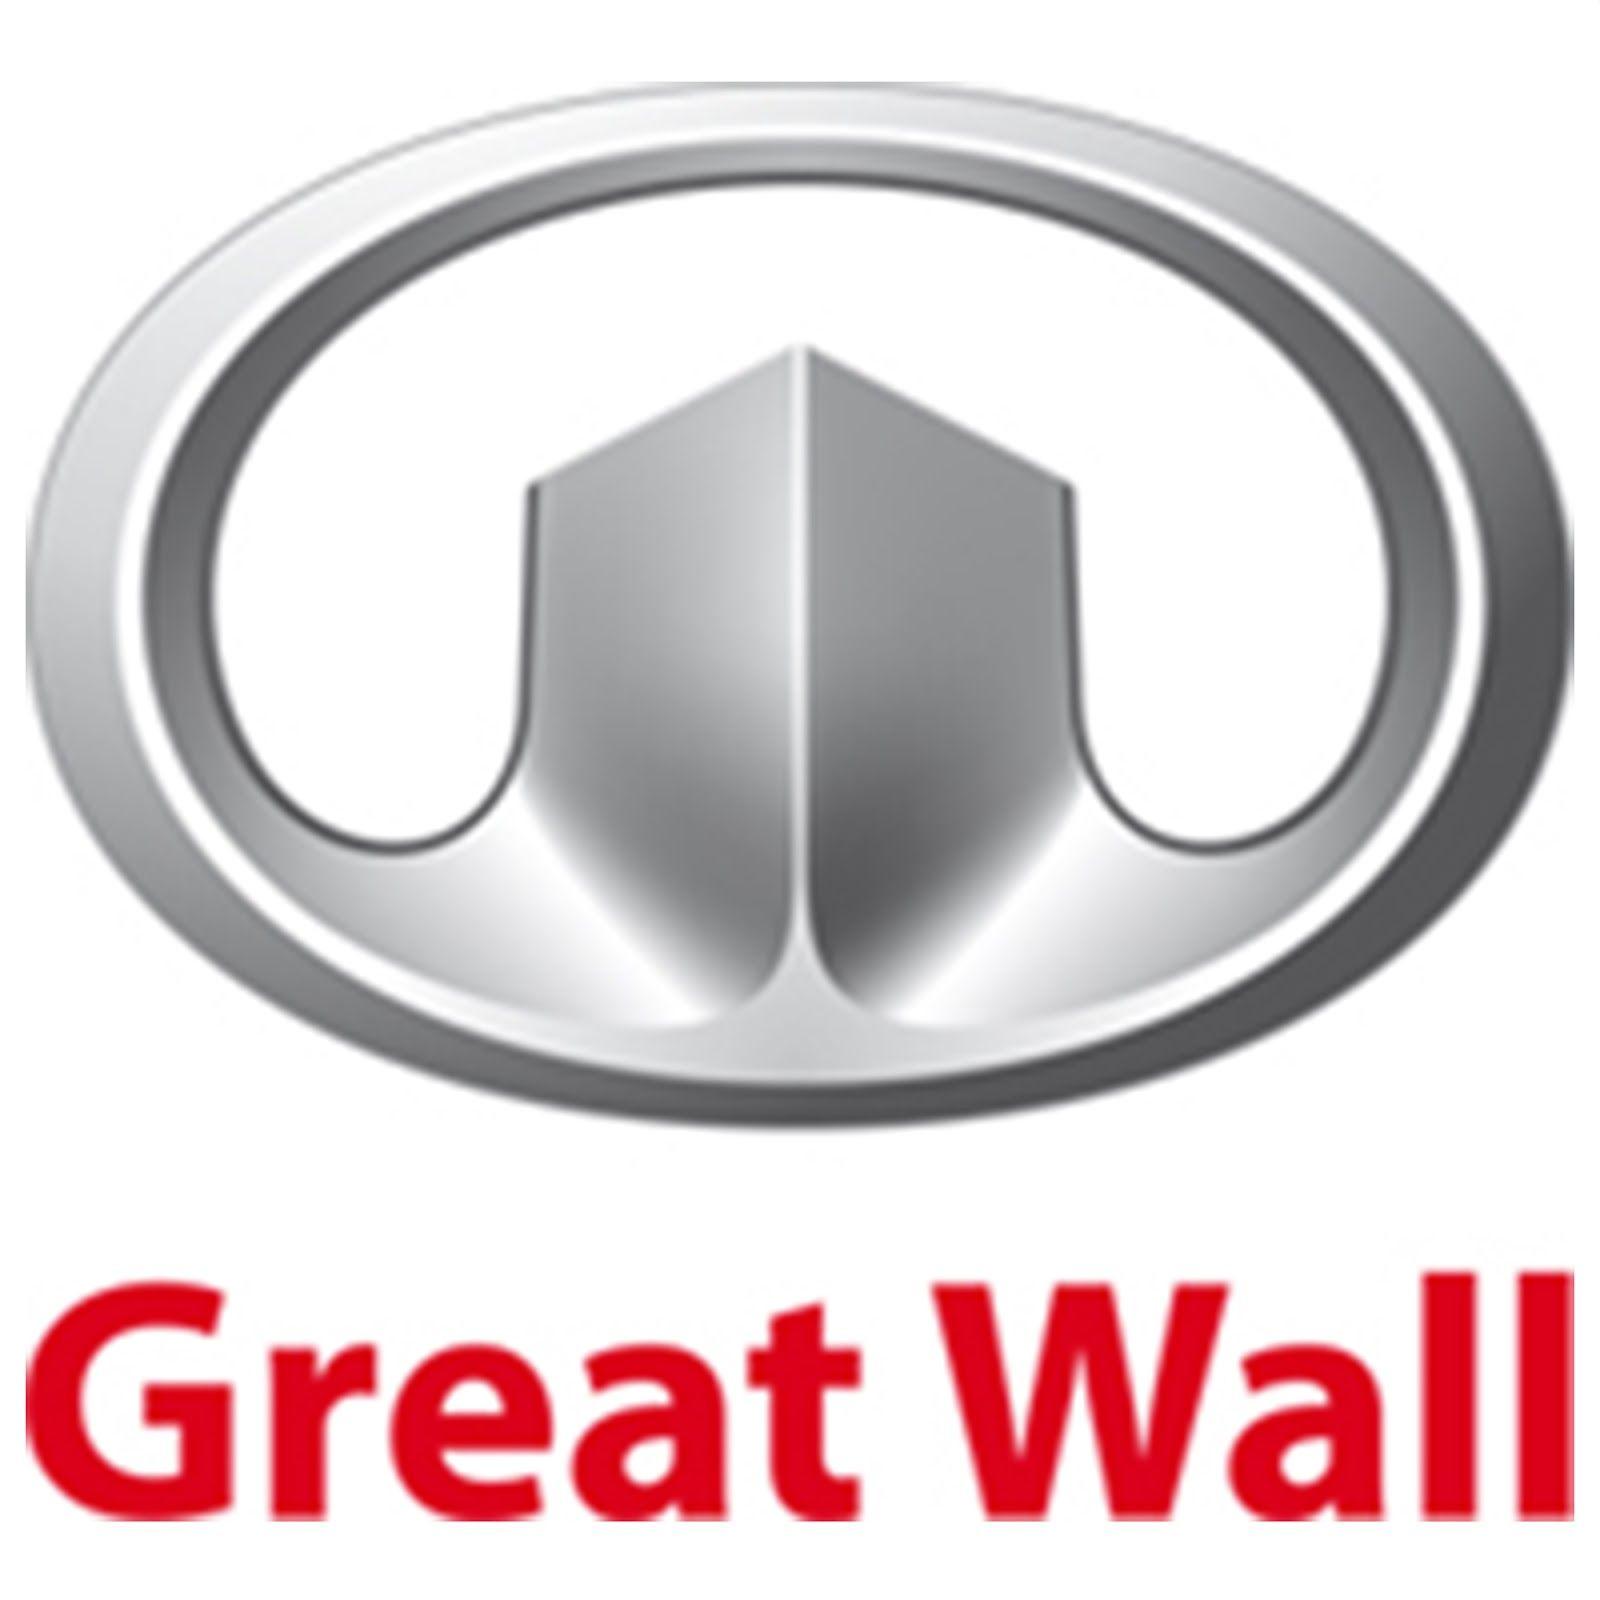 Great Wall Motors Logo - Automotive Database: Great Wall Motors